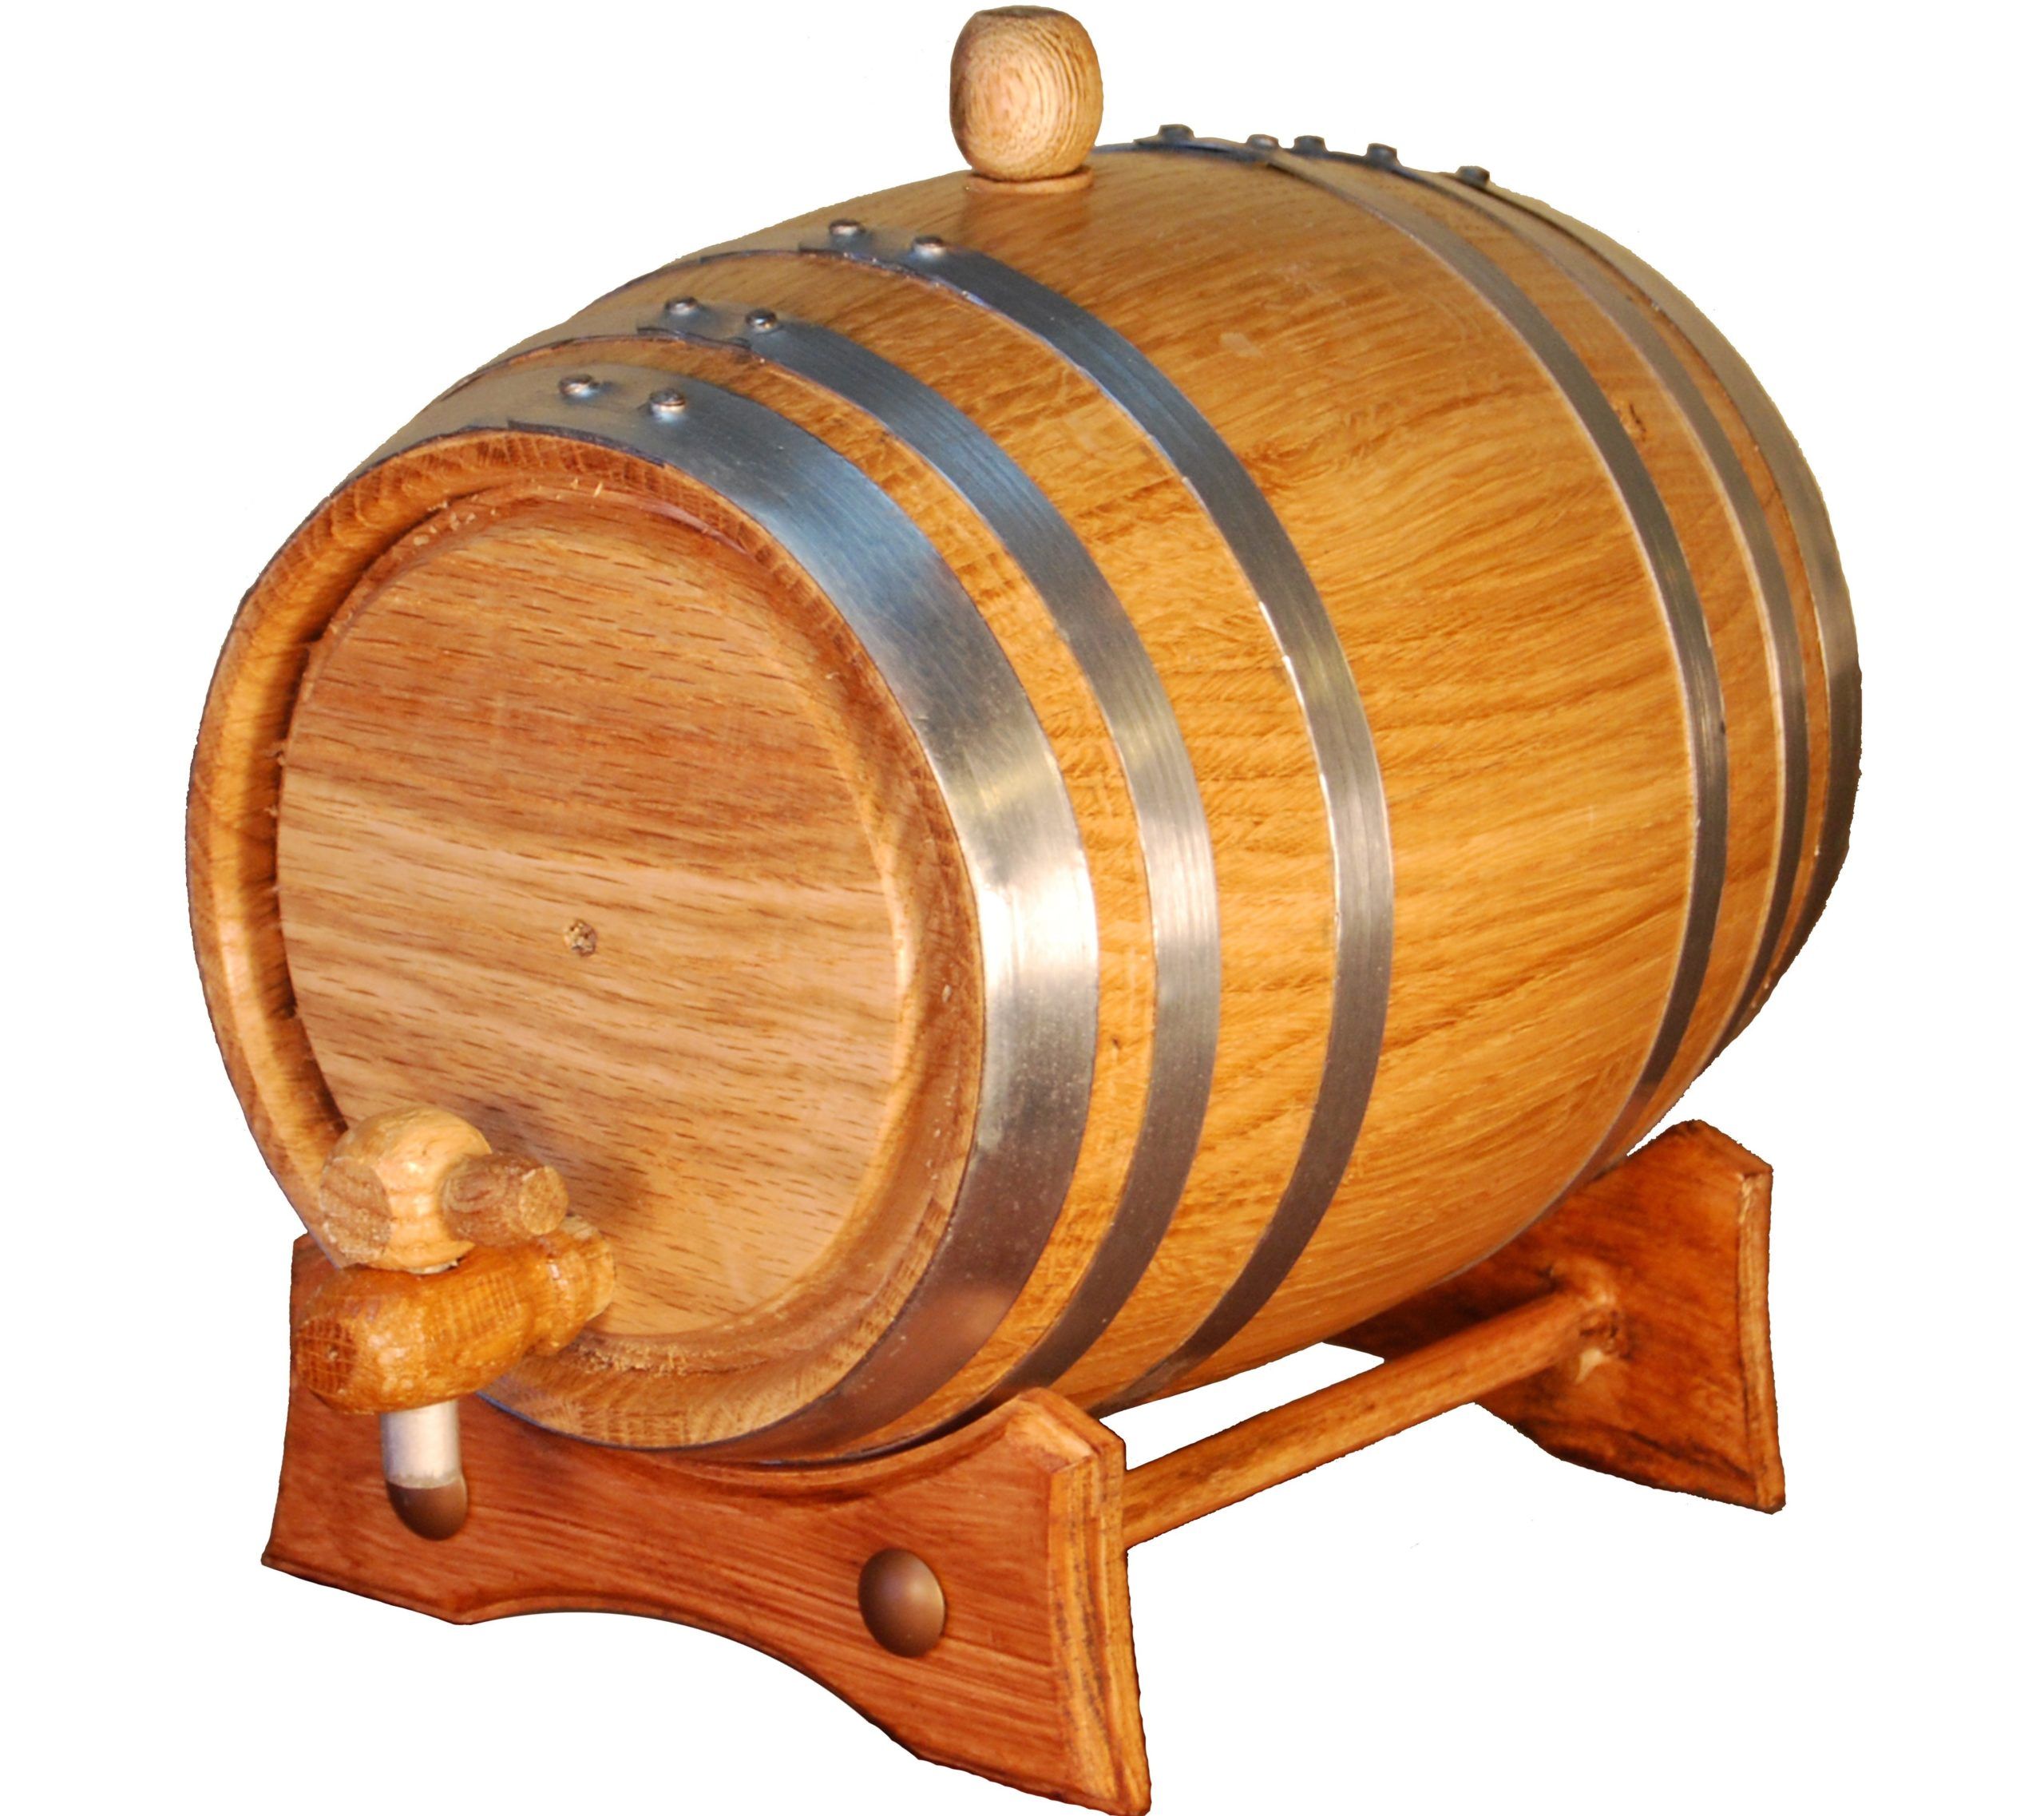 etc 270x180mm Barriles de Vino de Roble de 5L Barril de Madera Barril de Licor barriles de Vino barriles con Grifo de Madera y Soporte para Vino Whisky licores 